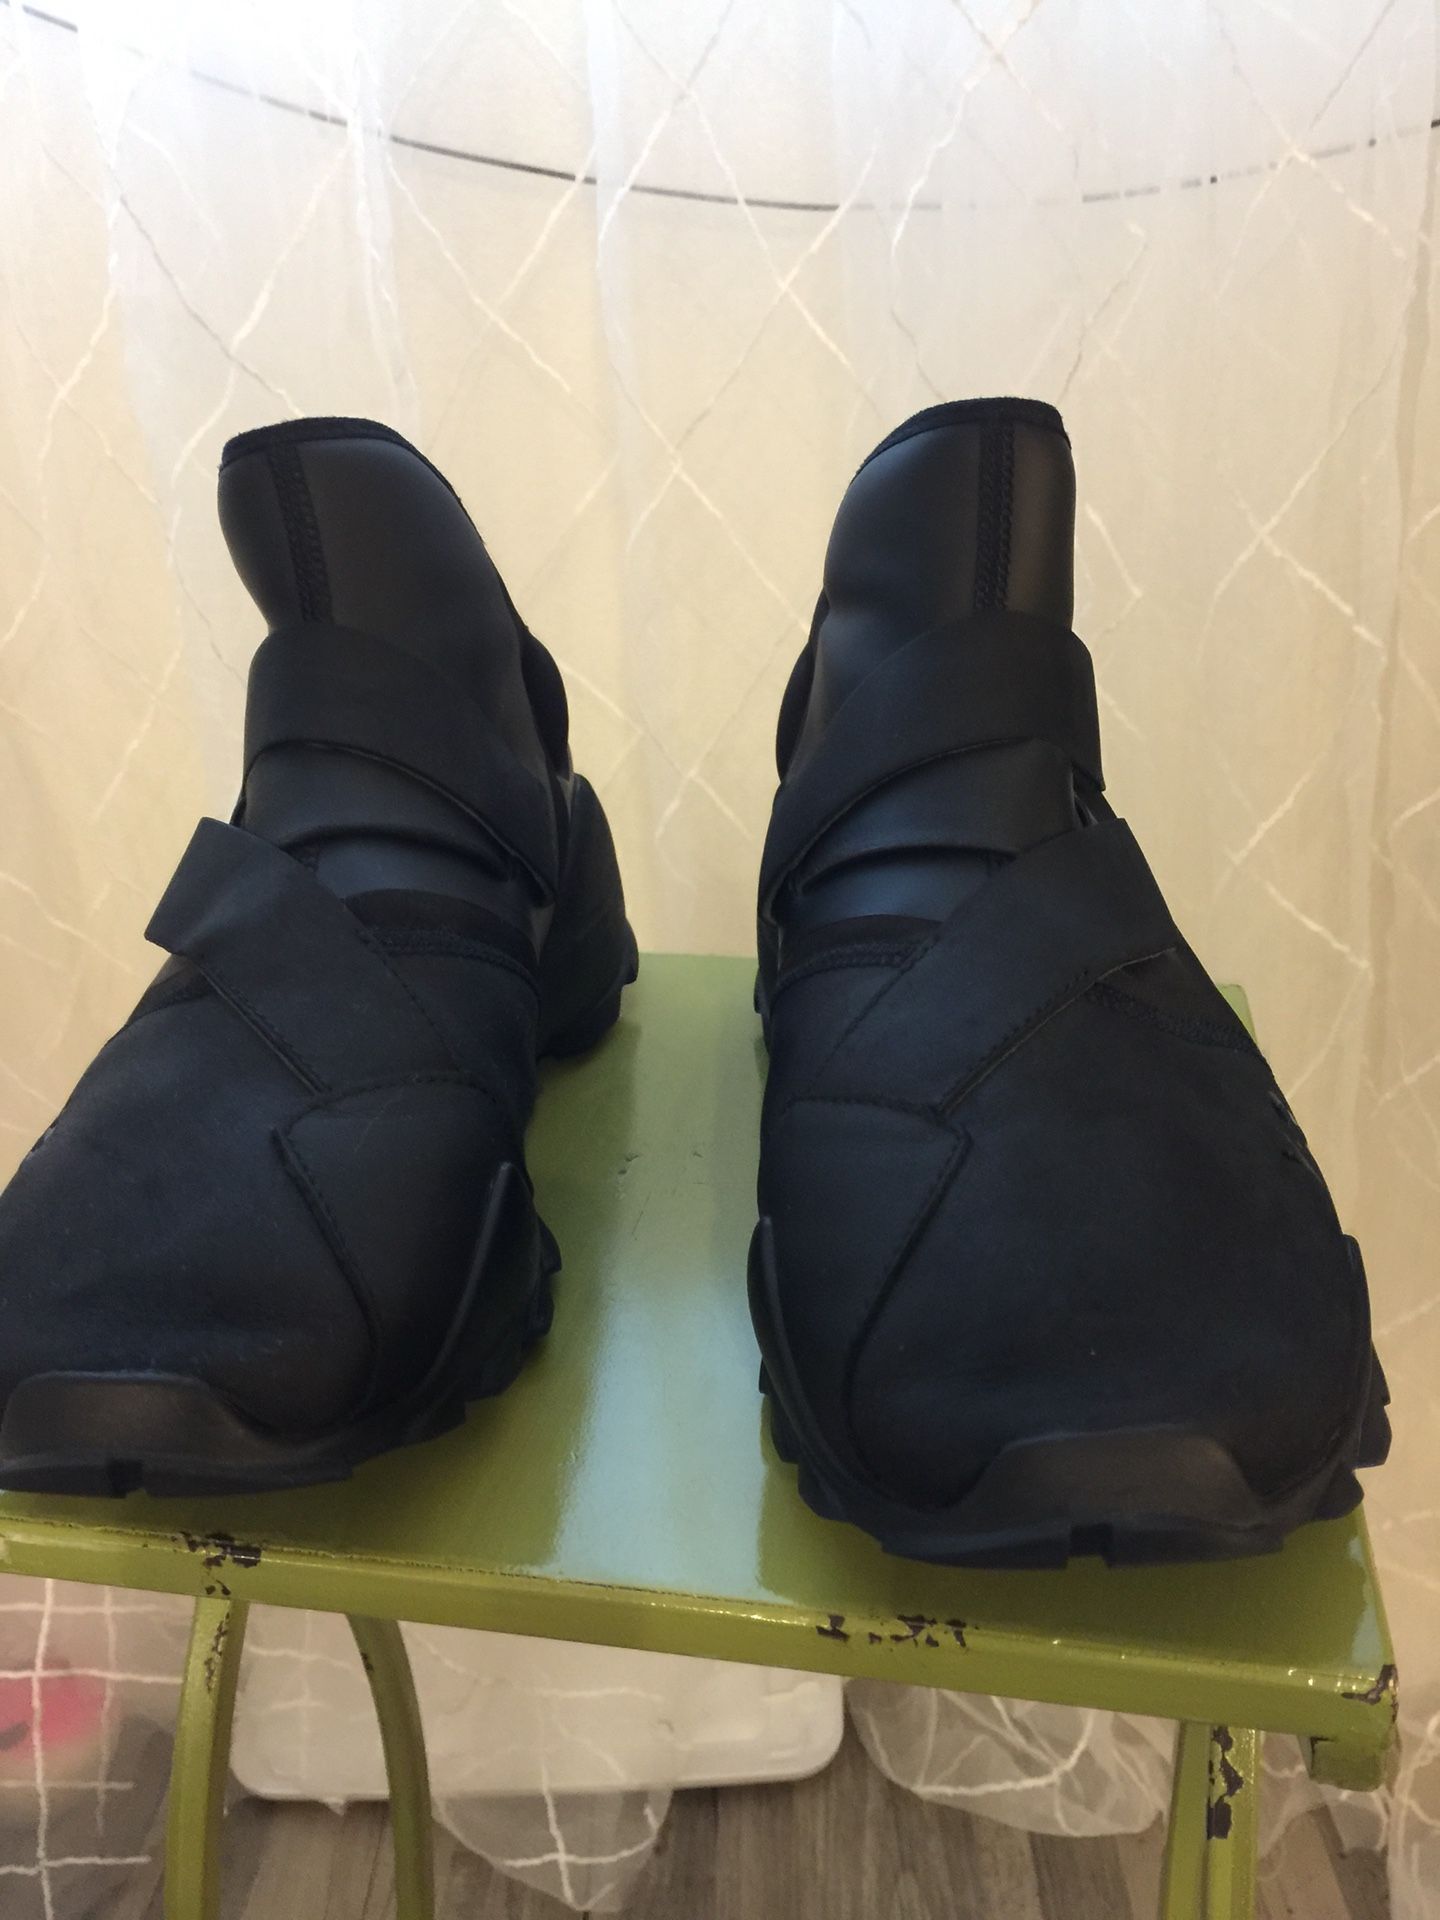 Y-3 Yohji Yamamoto Adidas RYO triple black size 9 sneakers